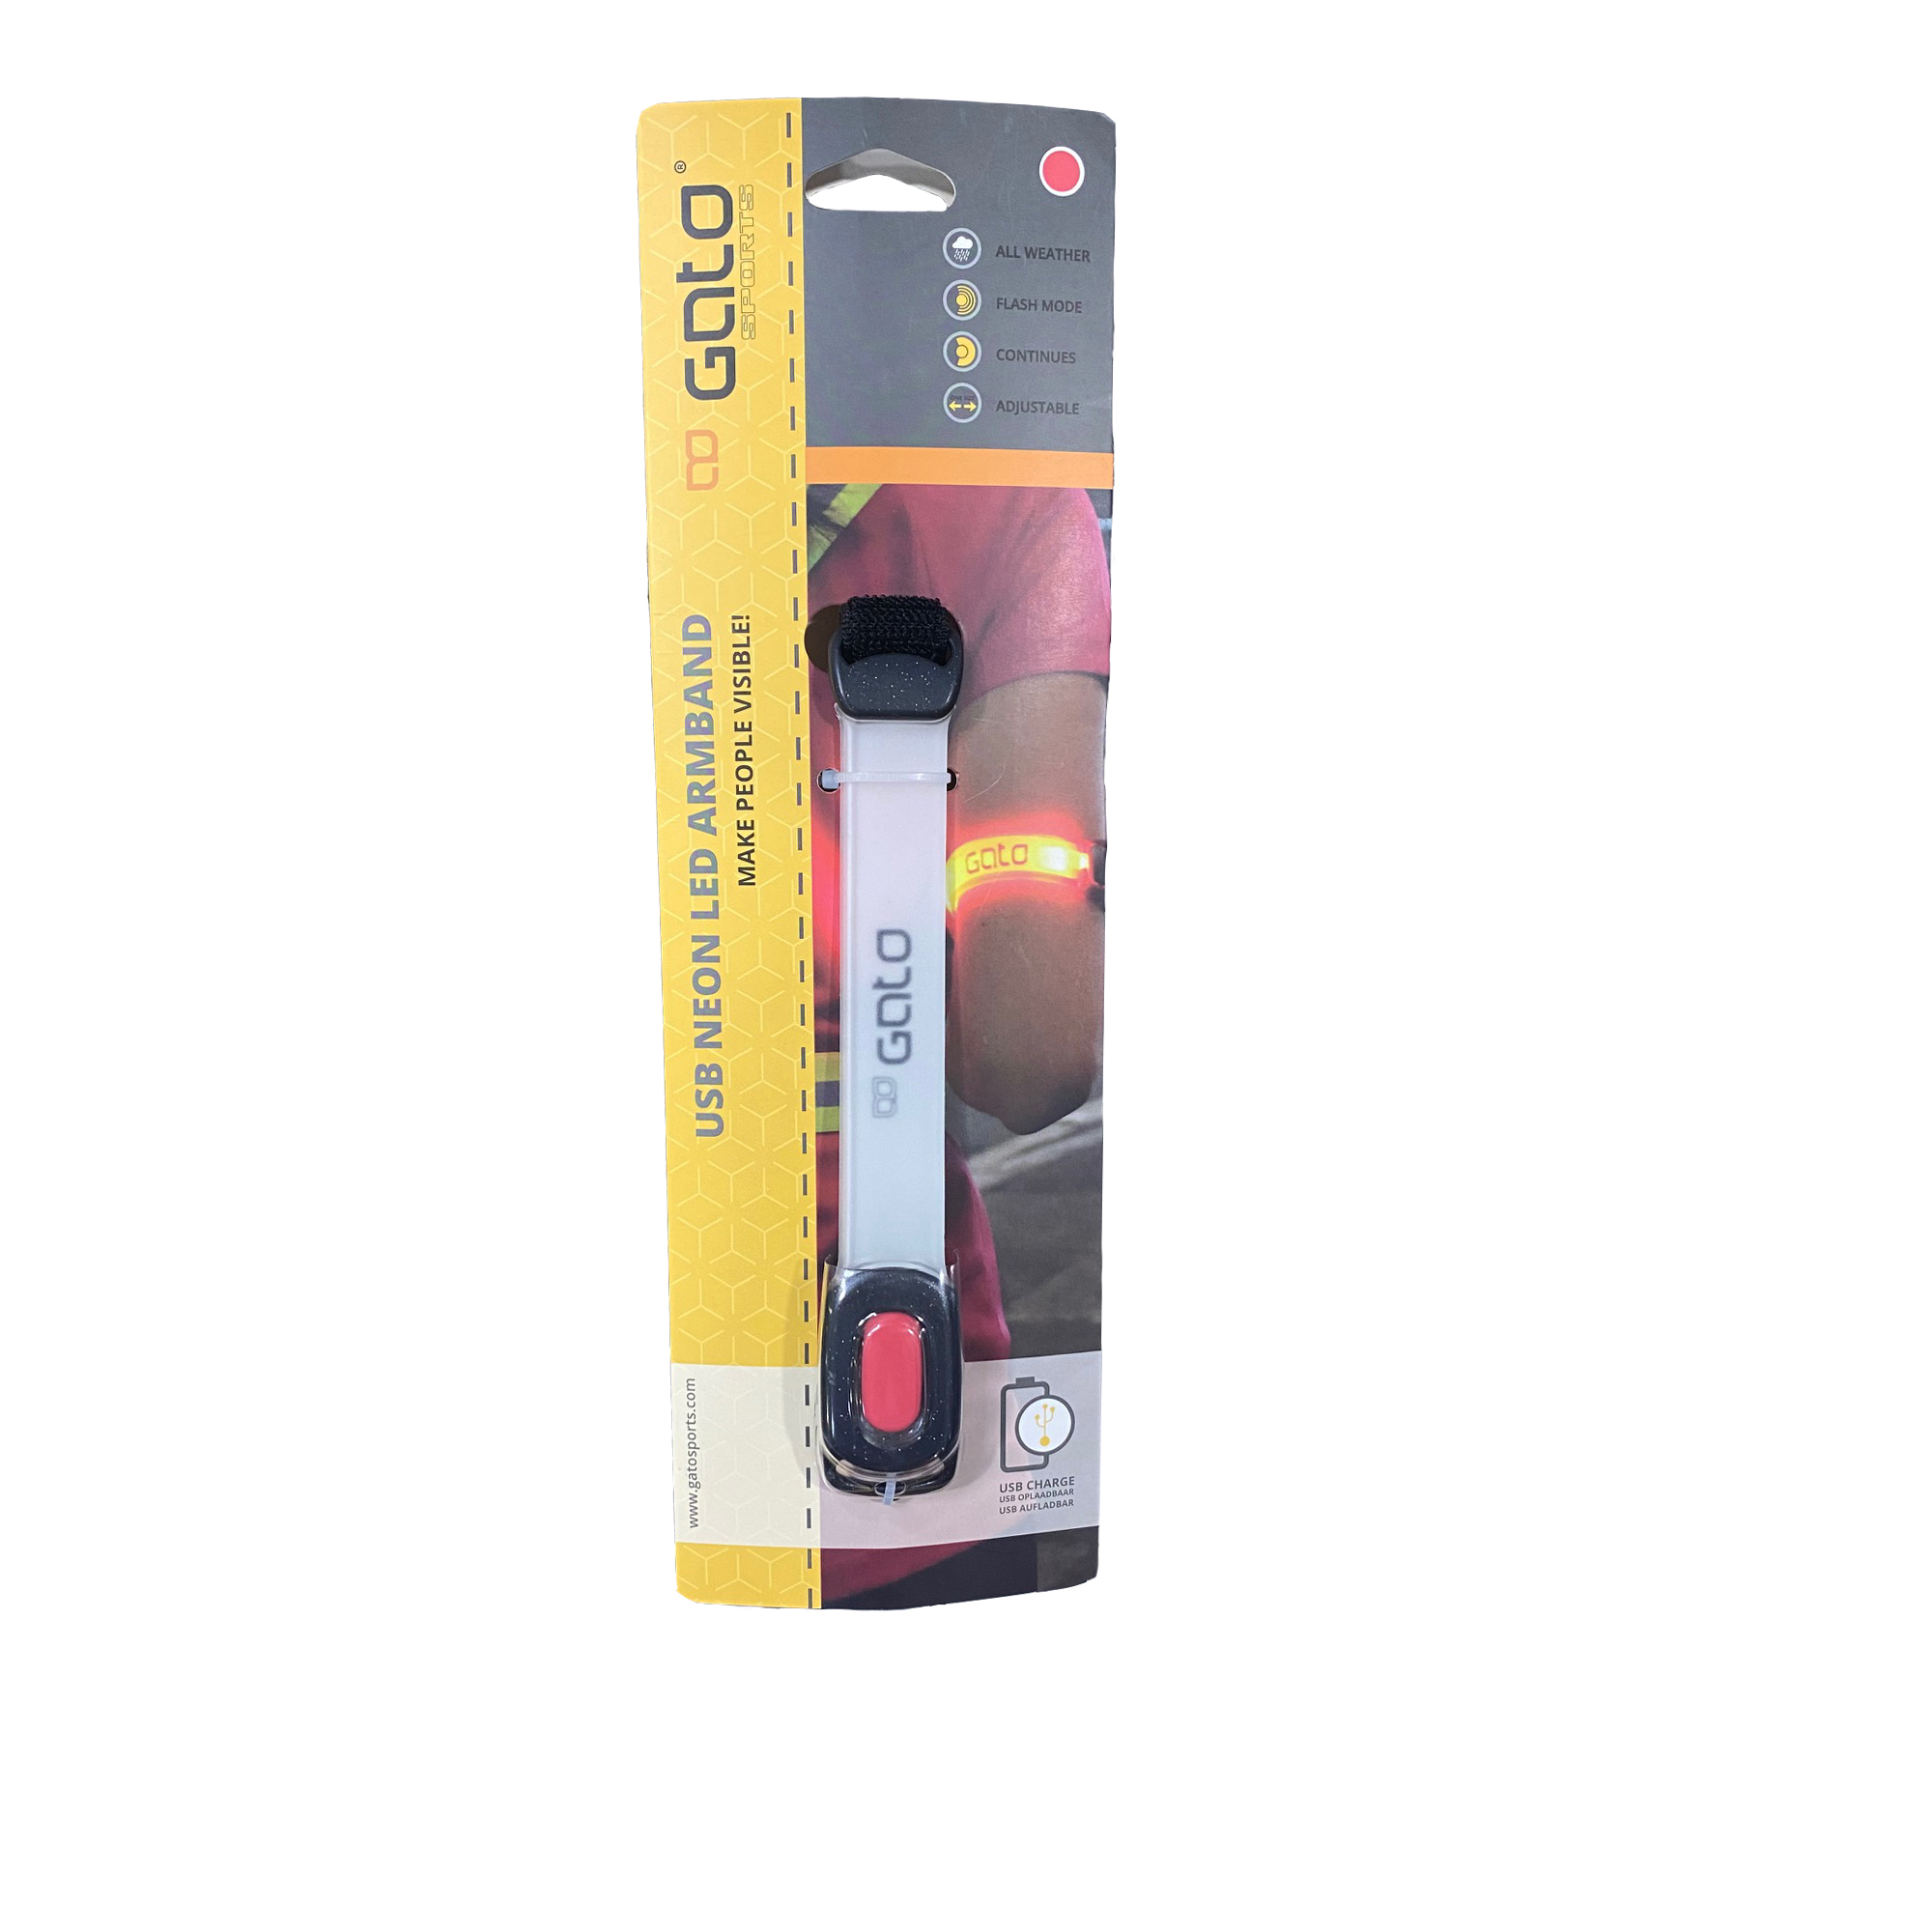 Gato USB Neon Armband Light Red - Sutton Runner